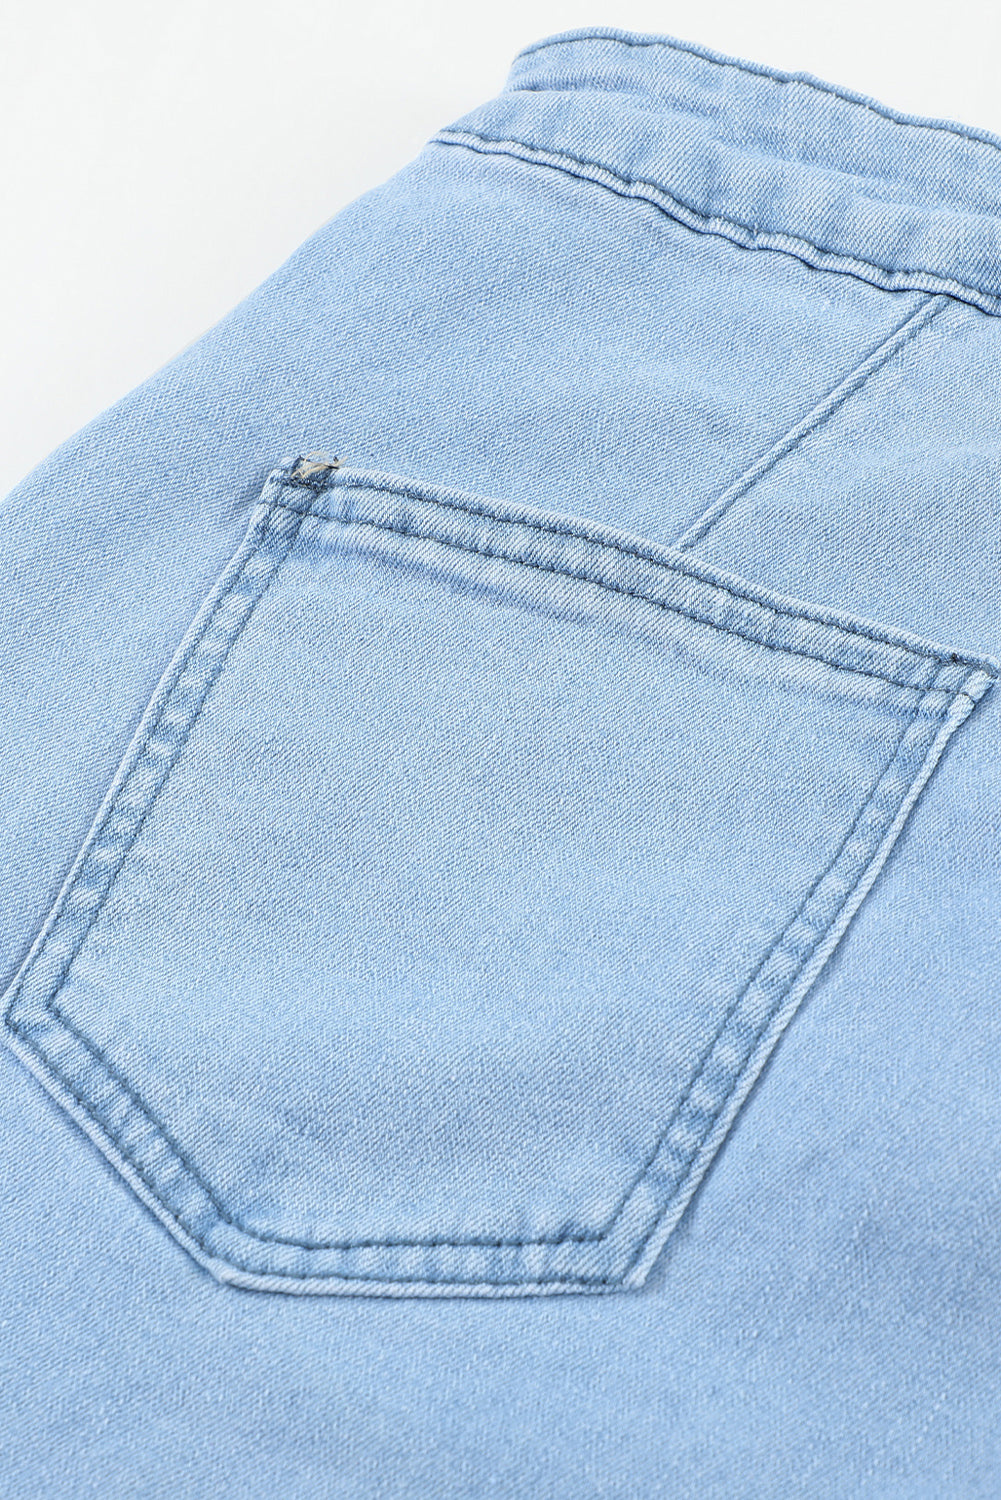 Sky Blue High Waist Pockets Bell Jeans Jeans JT's Designer Fashion